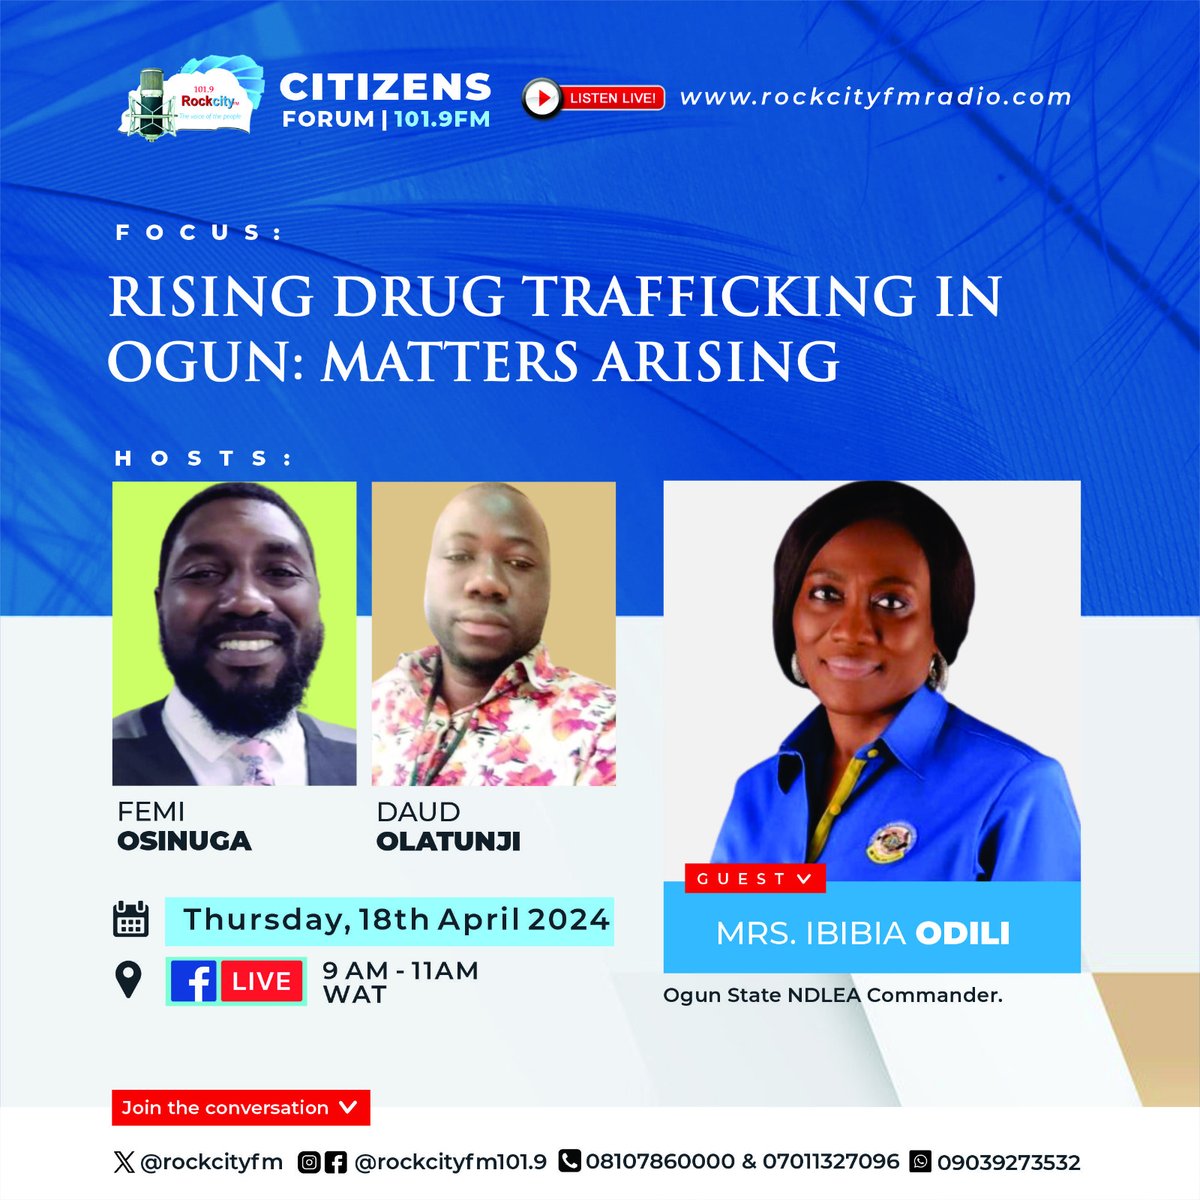 Join us on Thurs 18th April, 2024 at 9am on #CitizensForum #DaybreakShow

FOCUS: RISING DRUG TRAFFICKING IN OGUN: MATTERS ARISING

Guest: Mrs. Ibibia Odili 

Hosts: @OluHorsh & Daud Olatunji

Live: rockcityfmradio.com

#MattersArising #drugtrafficking #ogunstate